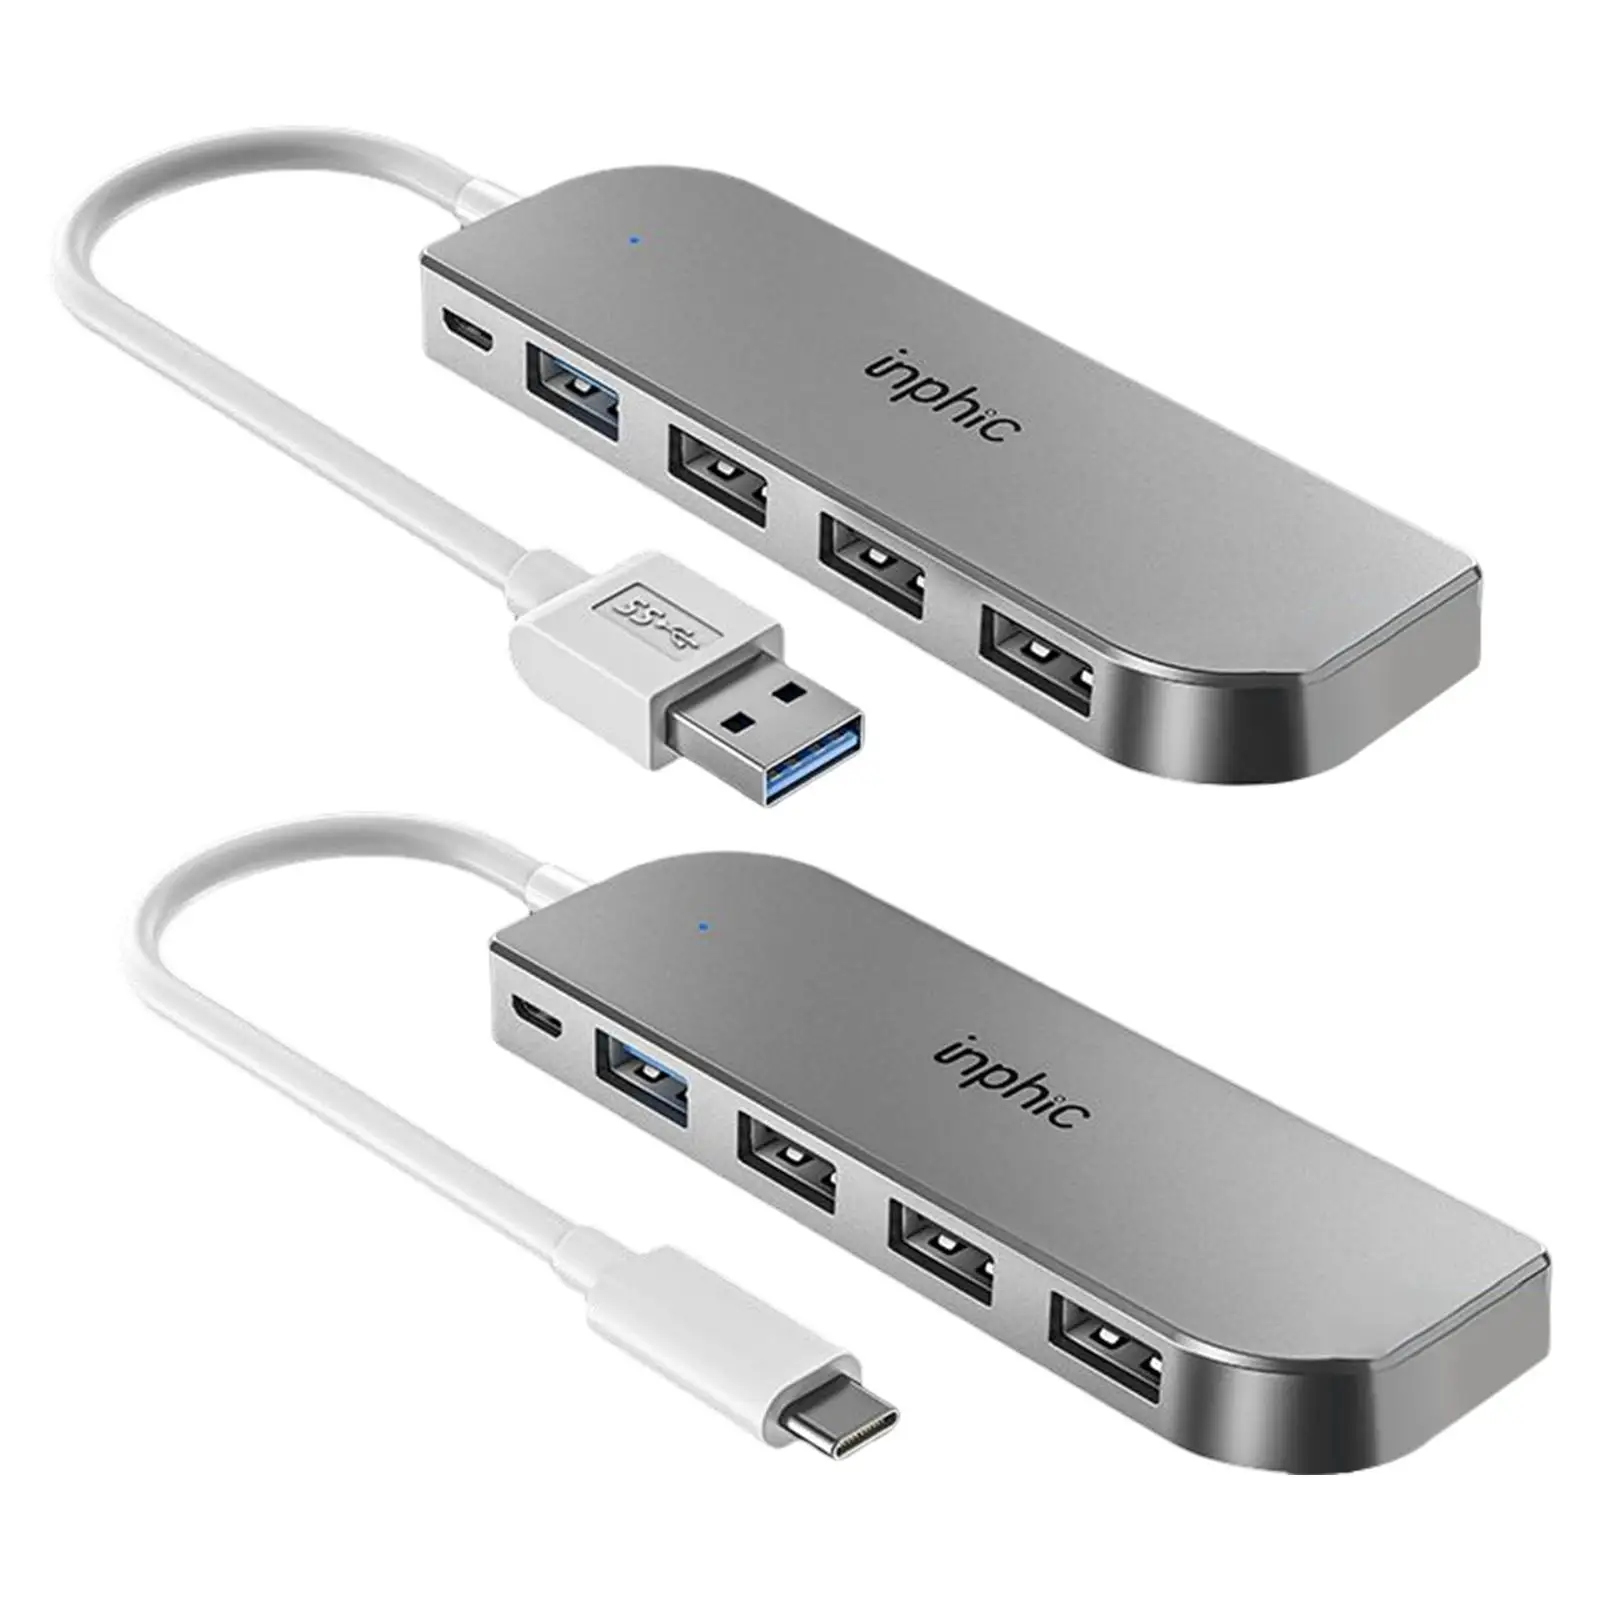 4 Port USB 3.0 Hub Fast Data Transfer High Speed USB Splitter for Mac/Windows Desktop PC